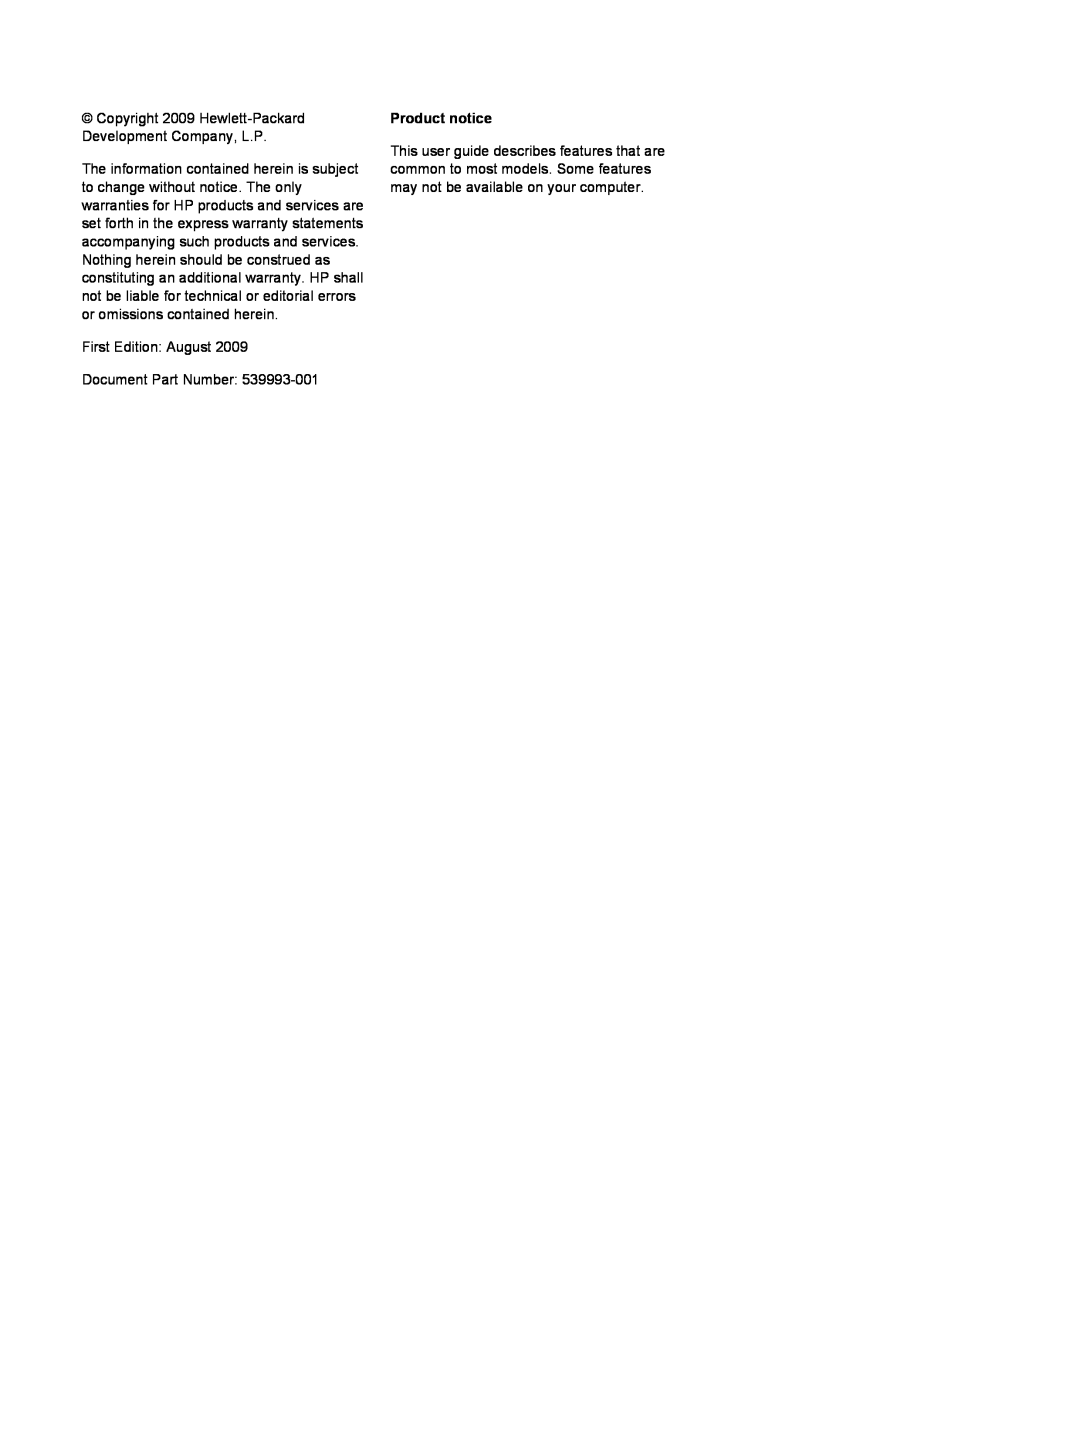 HP CQ40-748TU manual Copyright 2009 Hewlett-Packard Development Company, L.P, First Edition August Document Part Number 